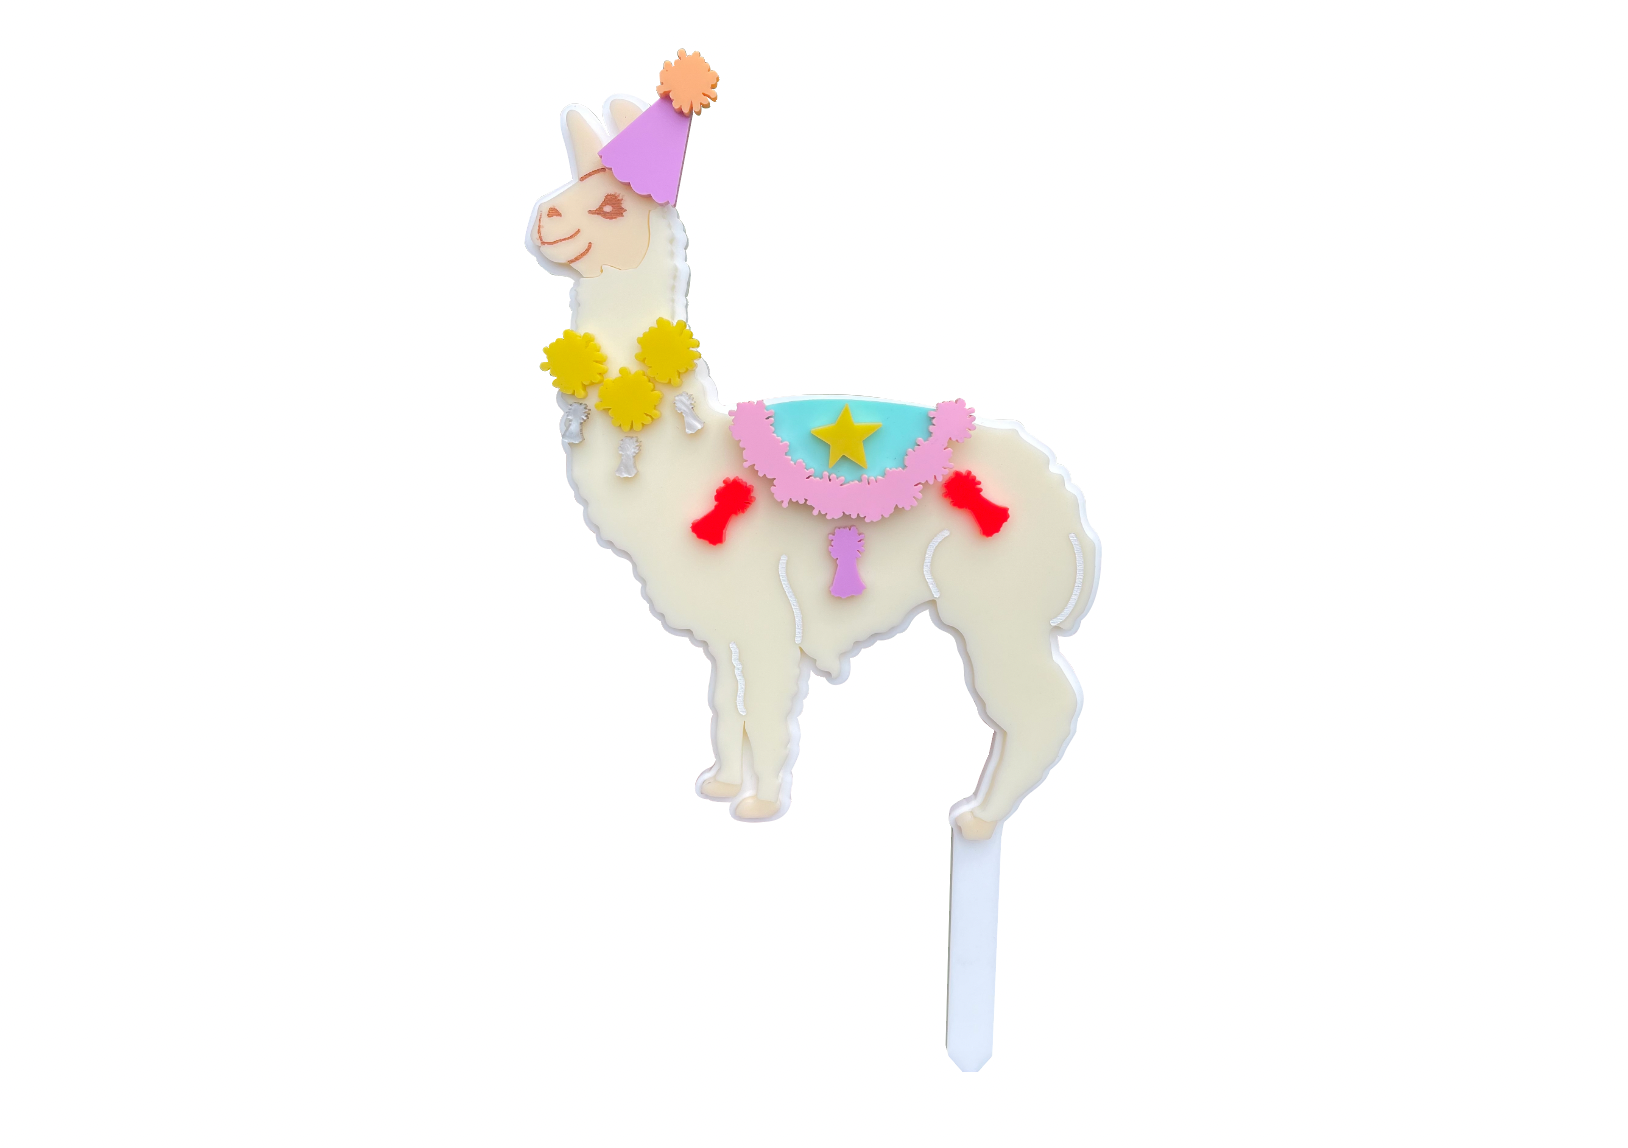 Premium Vector | Childish cute lama standing with celebratory birthday cake  on back. funny alpaca celebrating holiday. flat vector cartoon textured  illustration isolated on white background.